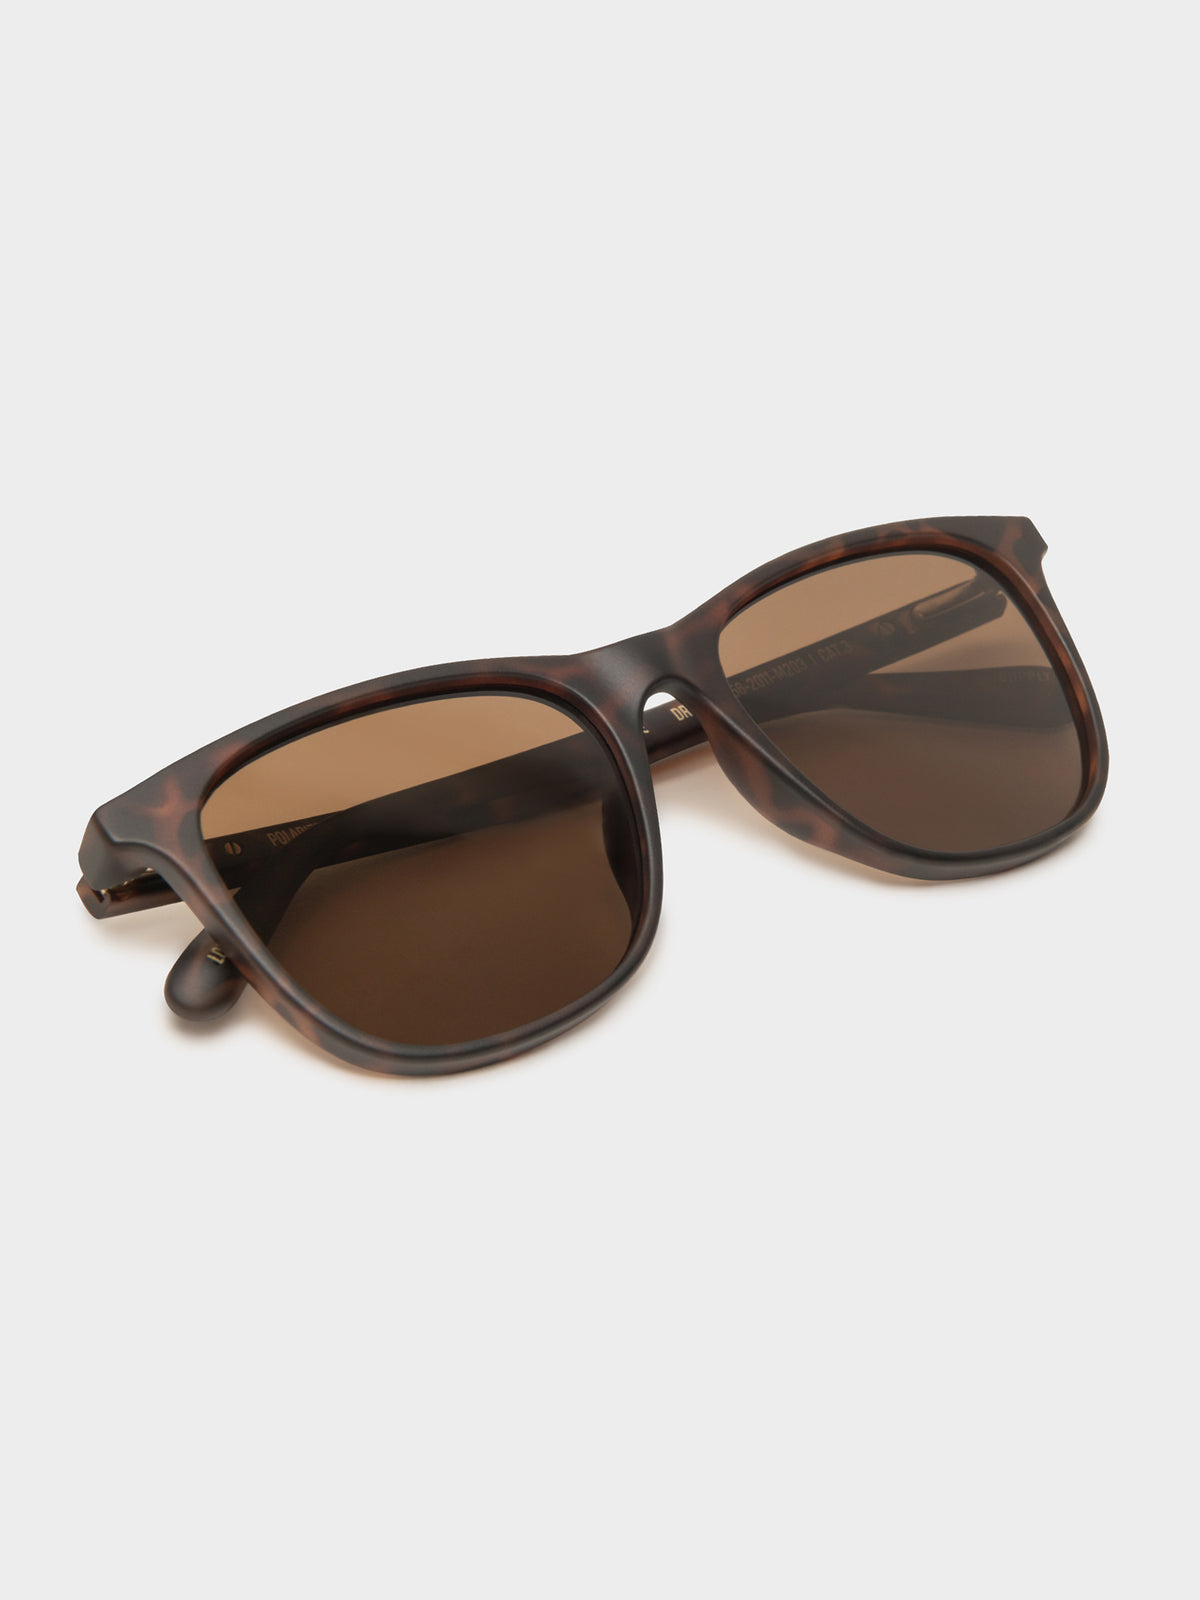 DRW Polarised Sunglasses in Brown Tortoiseshell